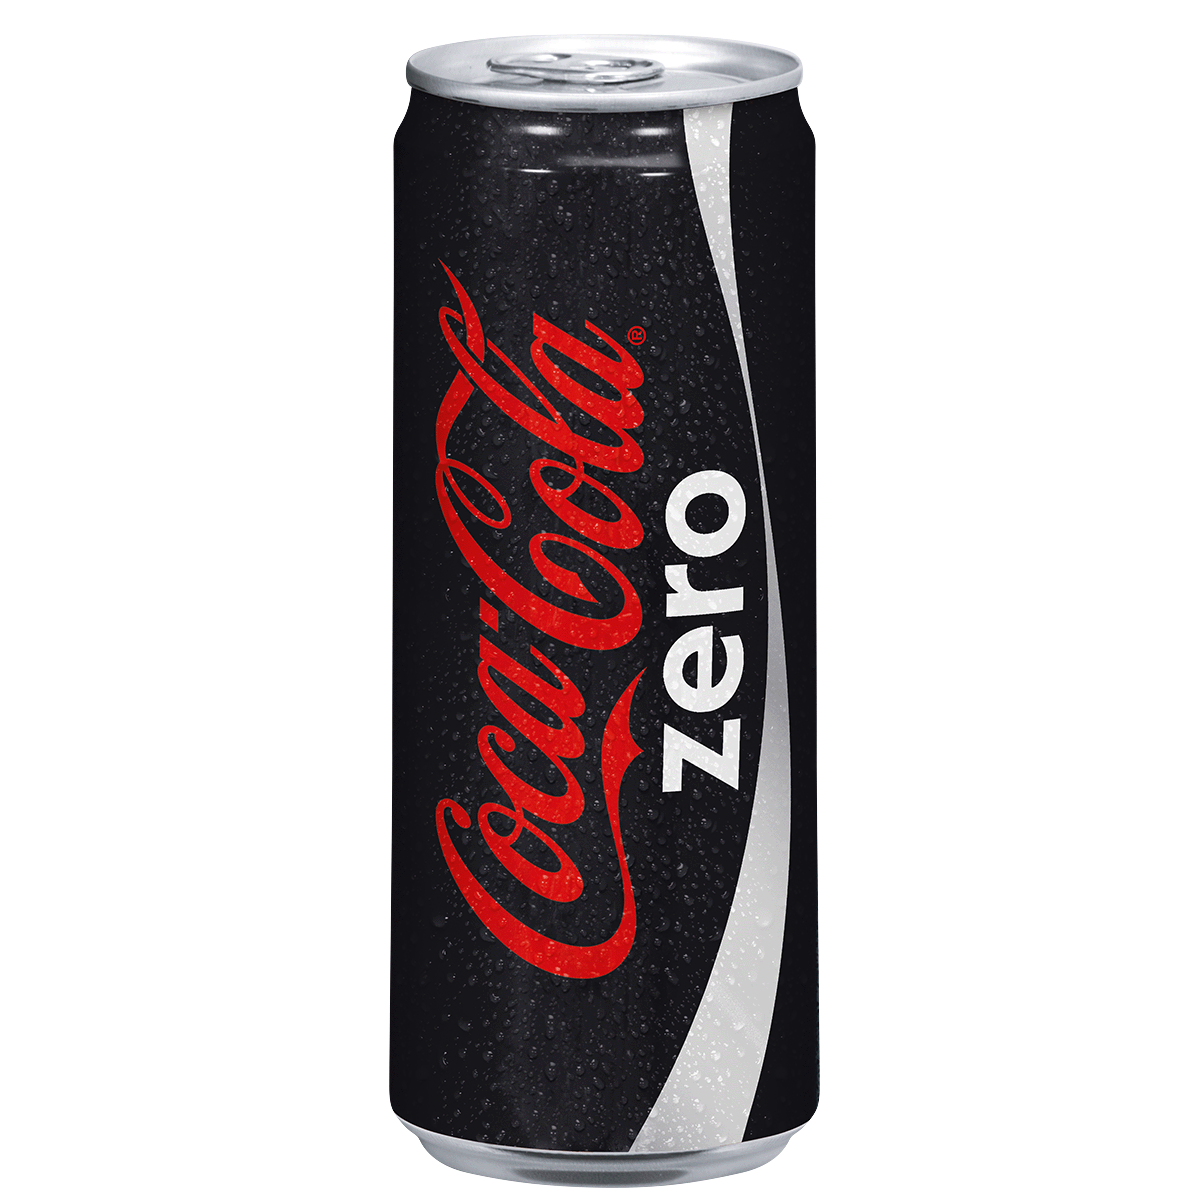 E 0 33. Coca Cola Zero 0.33. Кока кола Зеро 0.33 банка. Coca Cola Zero напиток. • Напитки Coca-Cola Zero /Кока-кола Зеро.